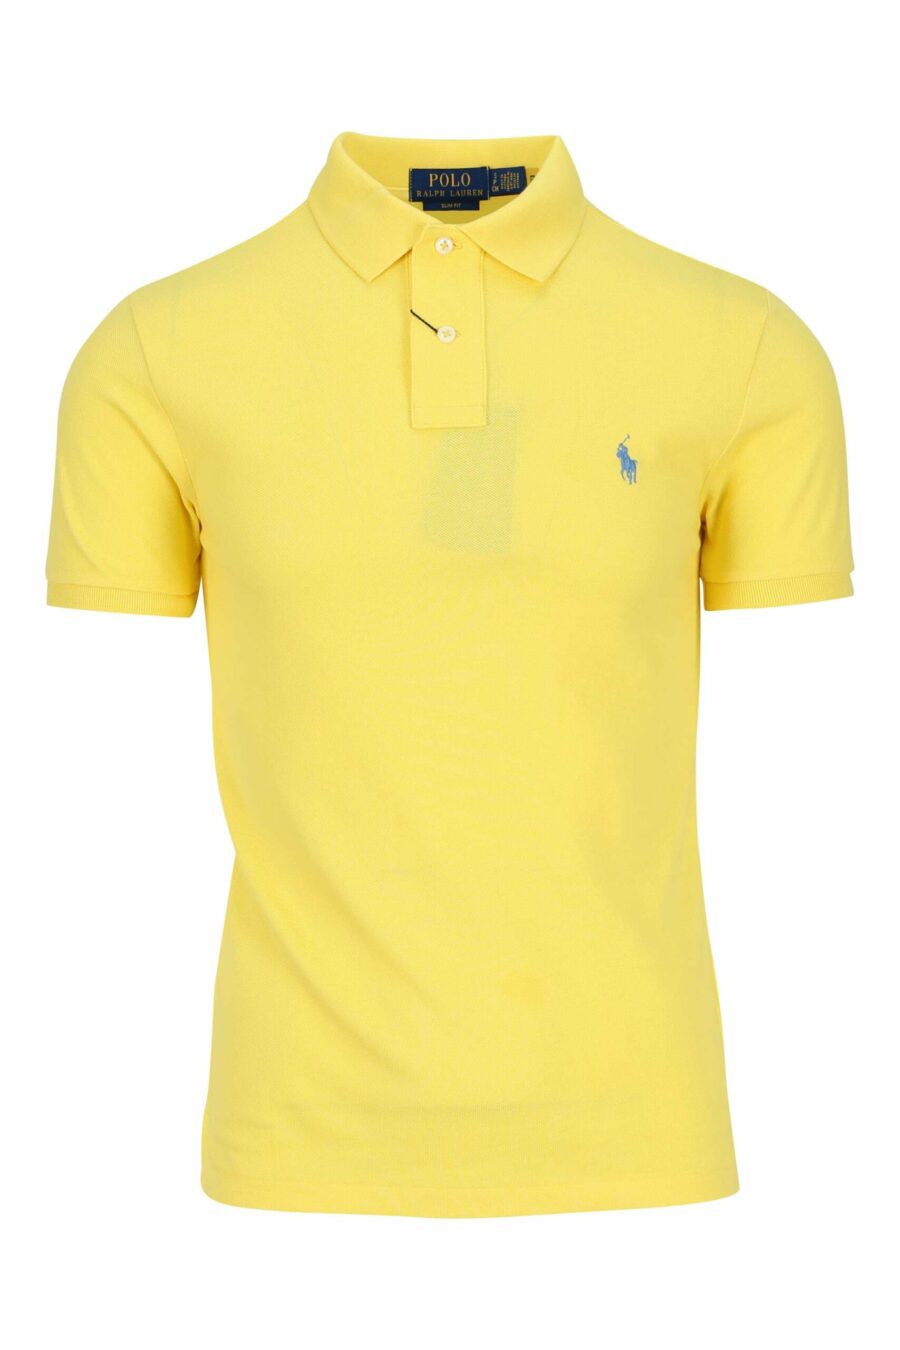 Camiseta amarilla y azul con minilogo "polo" - 3616535972186 scaled